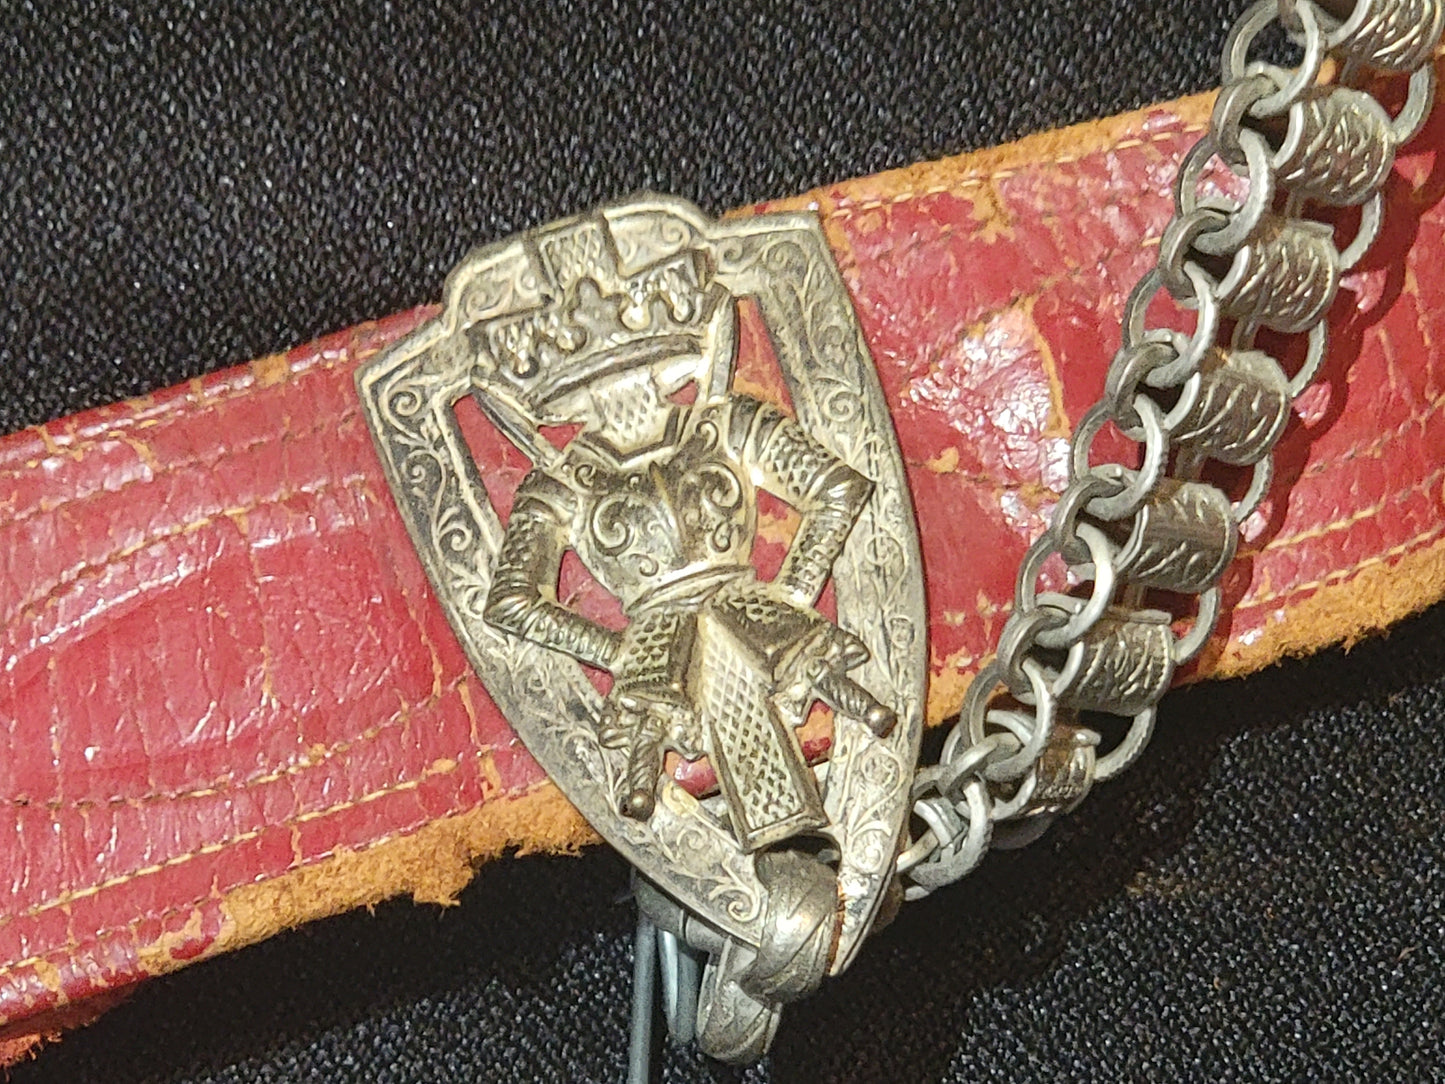 Masonic Knights Templar Ceremonial Dress Sword, Scabbard, and Belt